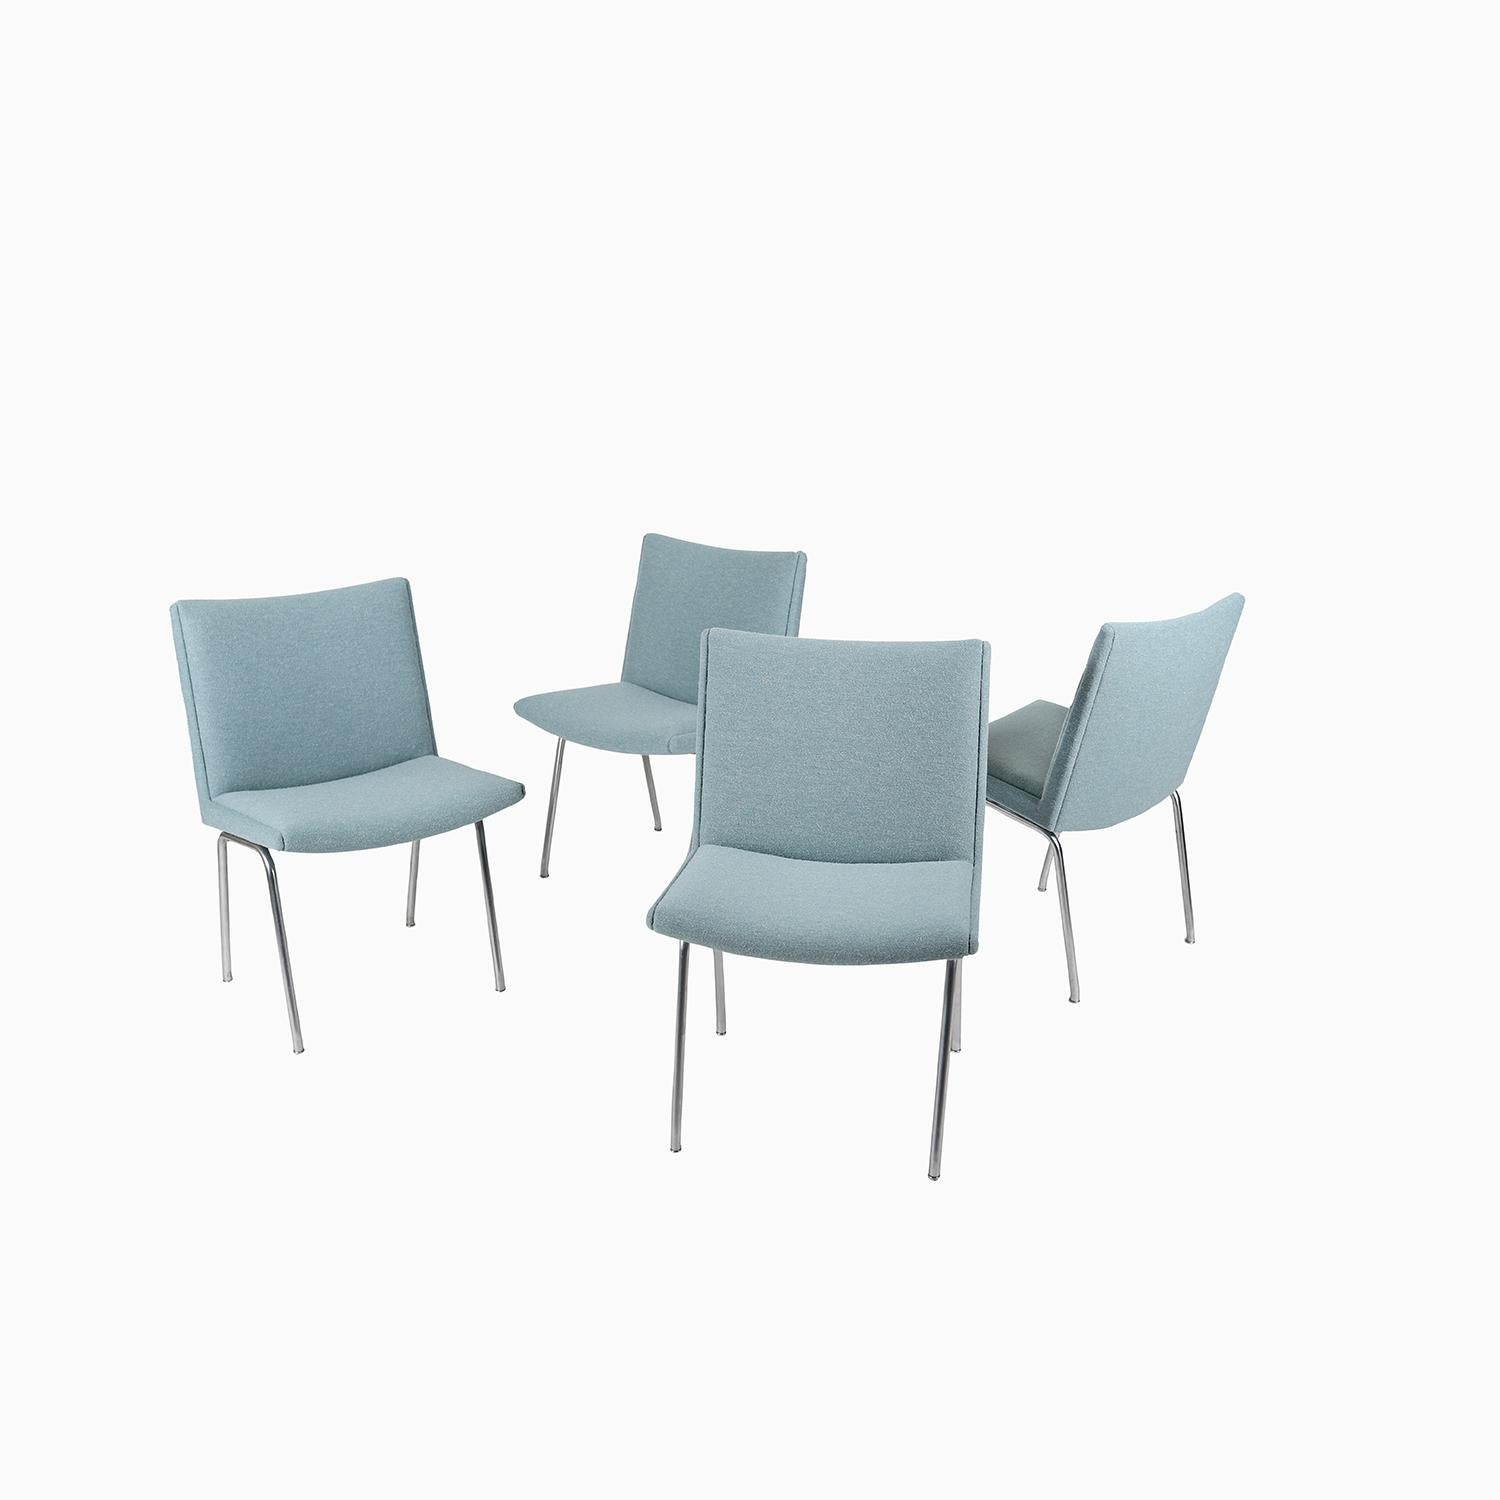 Danish modern “Airport” chair designed by Hans Wegner and produced by AP Stolen. Set has been recently reupholstered in Kjellerup Vaeveri 